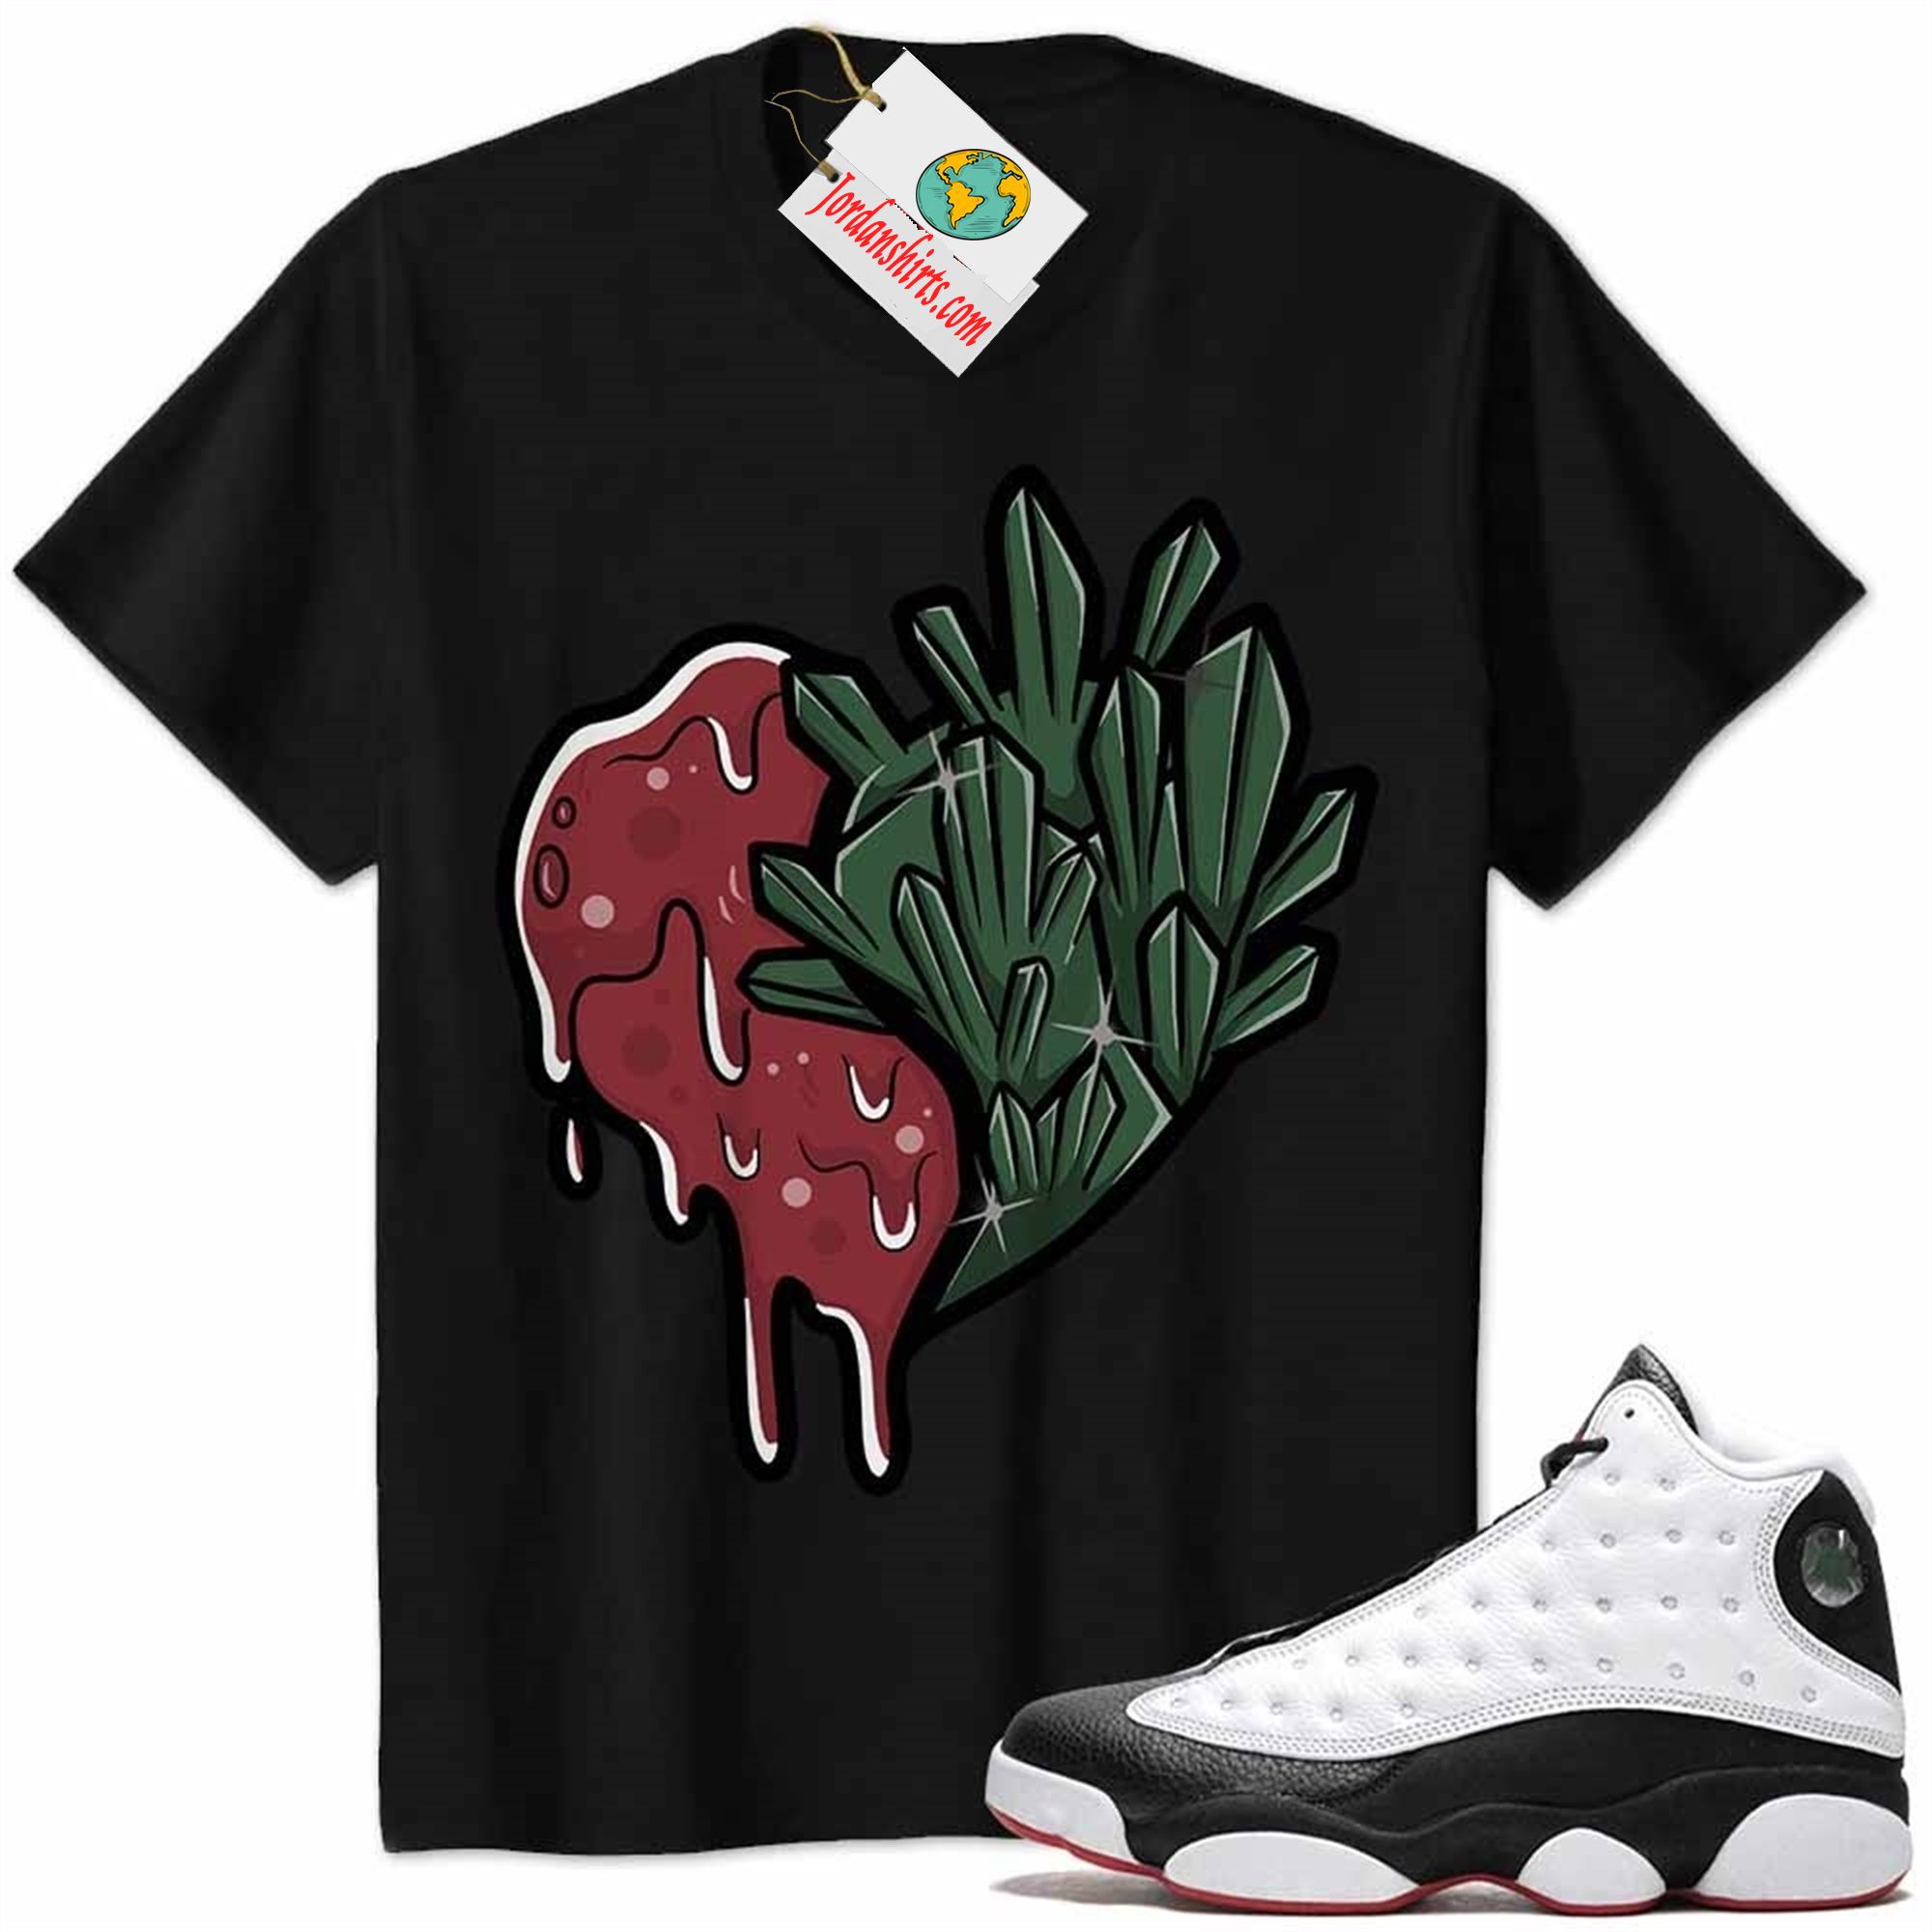 Jordan 13 Shirt, Crystal And Melt Heart Black Air Jordan 13 He Got Game 13s Full Size Up To 5xl